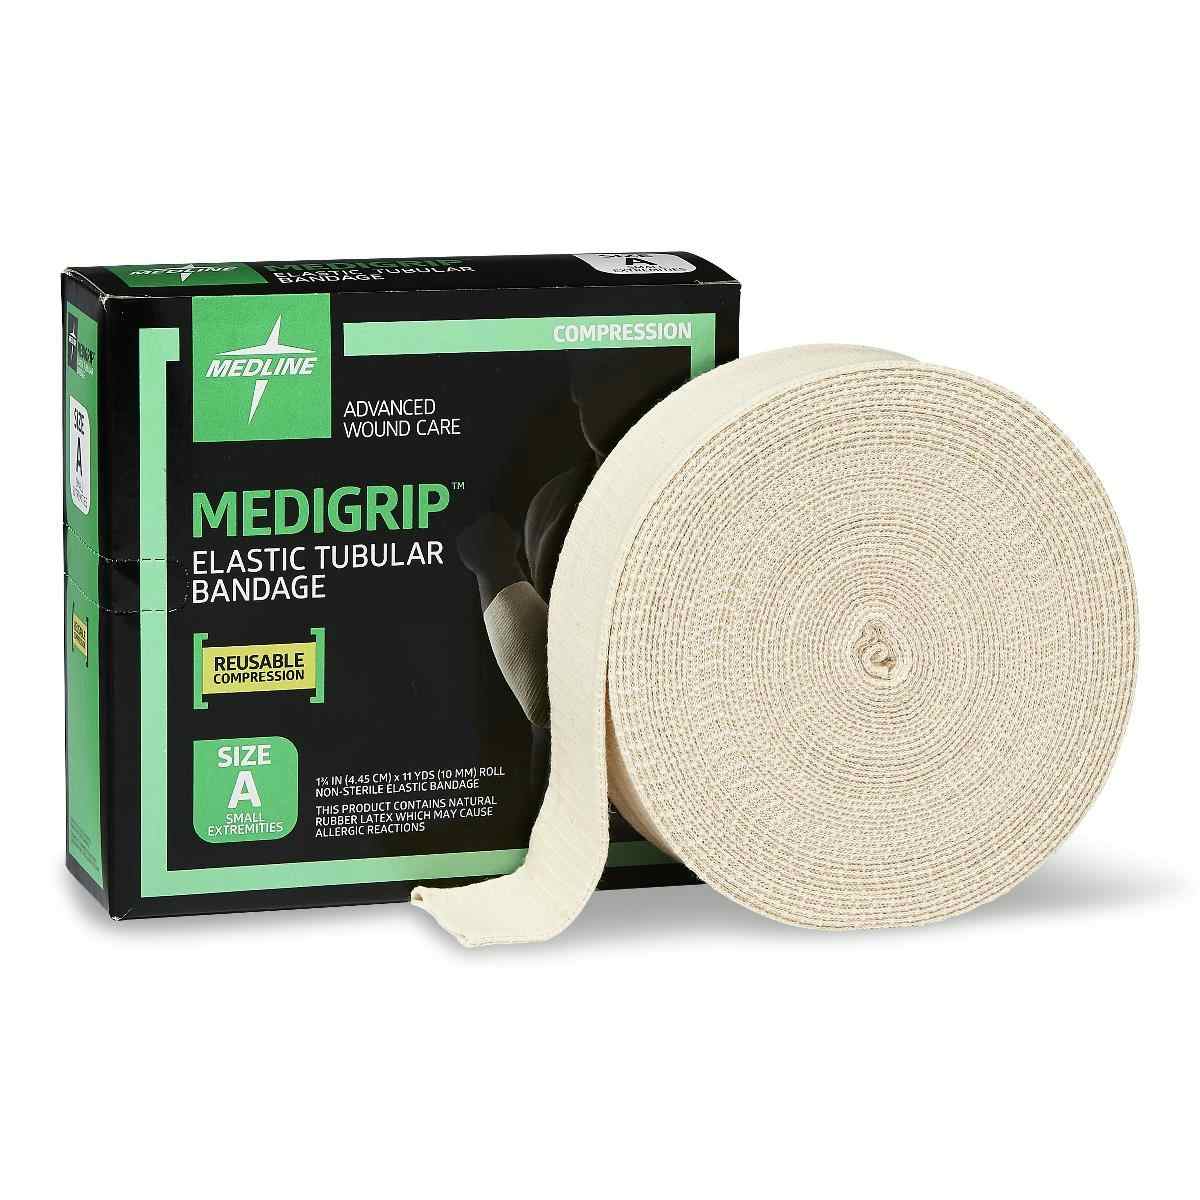 Medigrip Elastic Latex Tubular Support Bandage, Size A, MSC9500, 1 3/4" W (4.5 cm) - 1 Roll